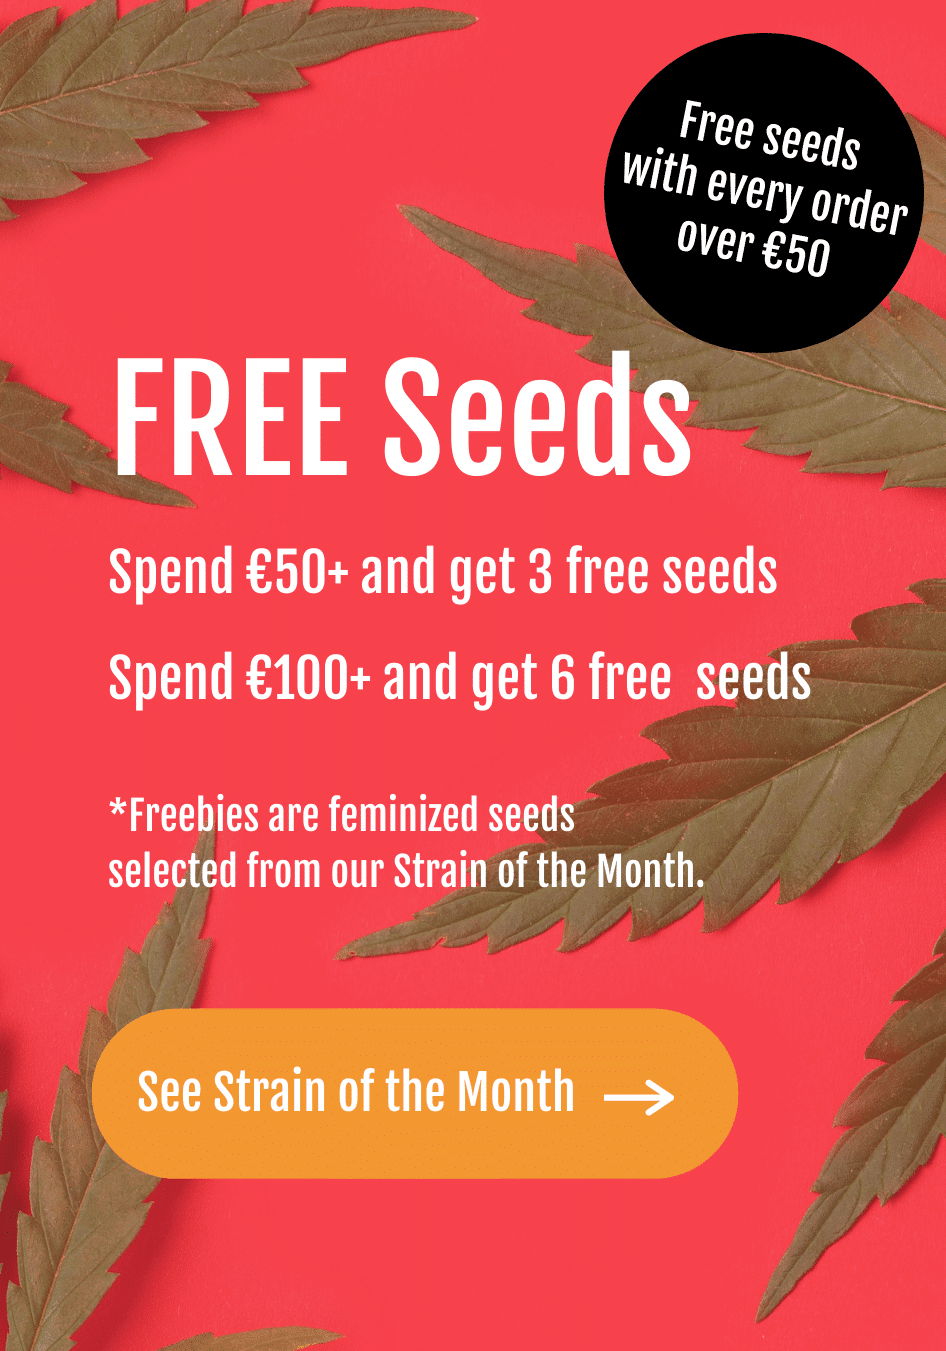 Free cannabis seeds with every order placed with Marijuana Grow Shop seedbank